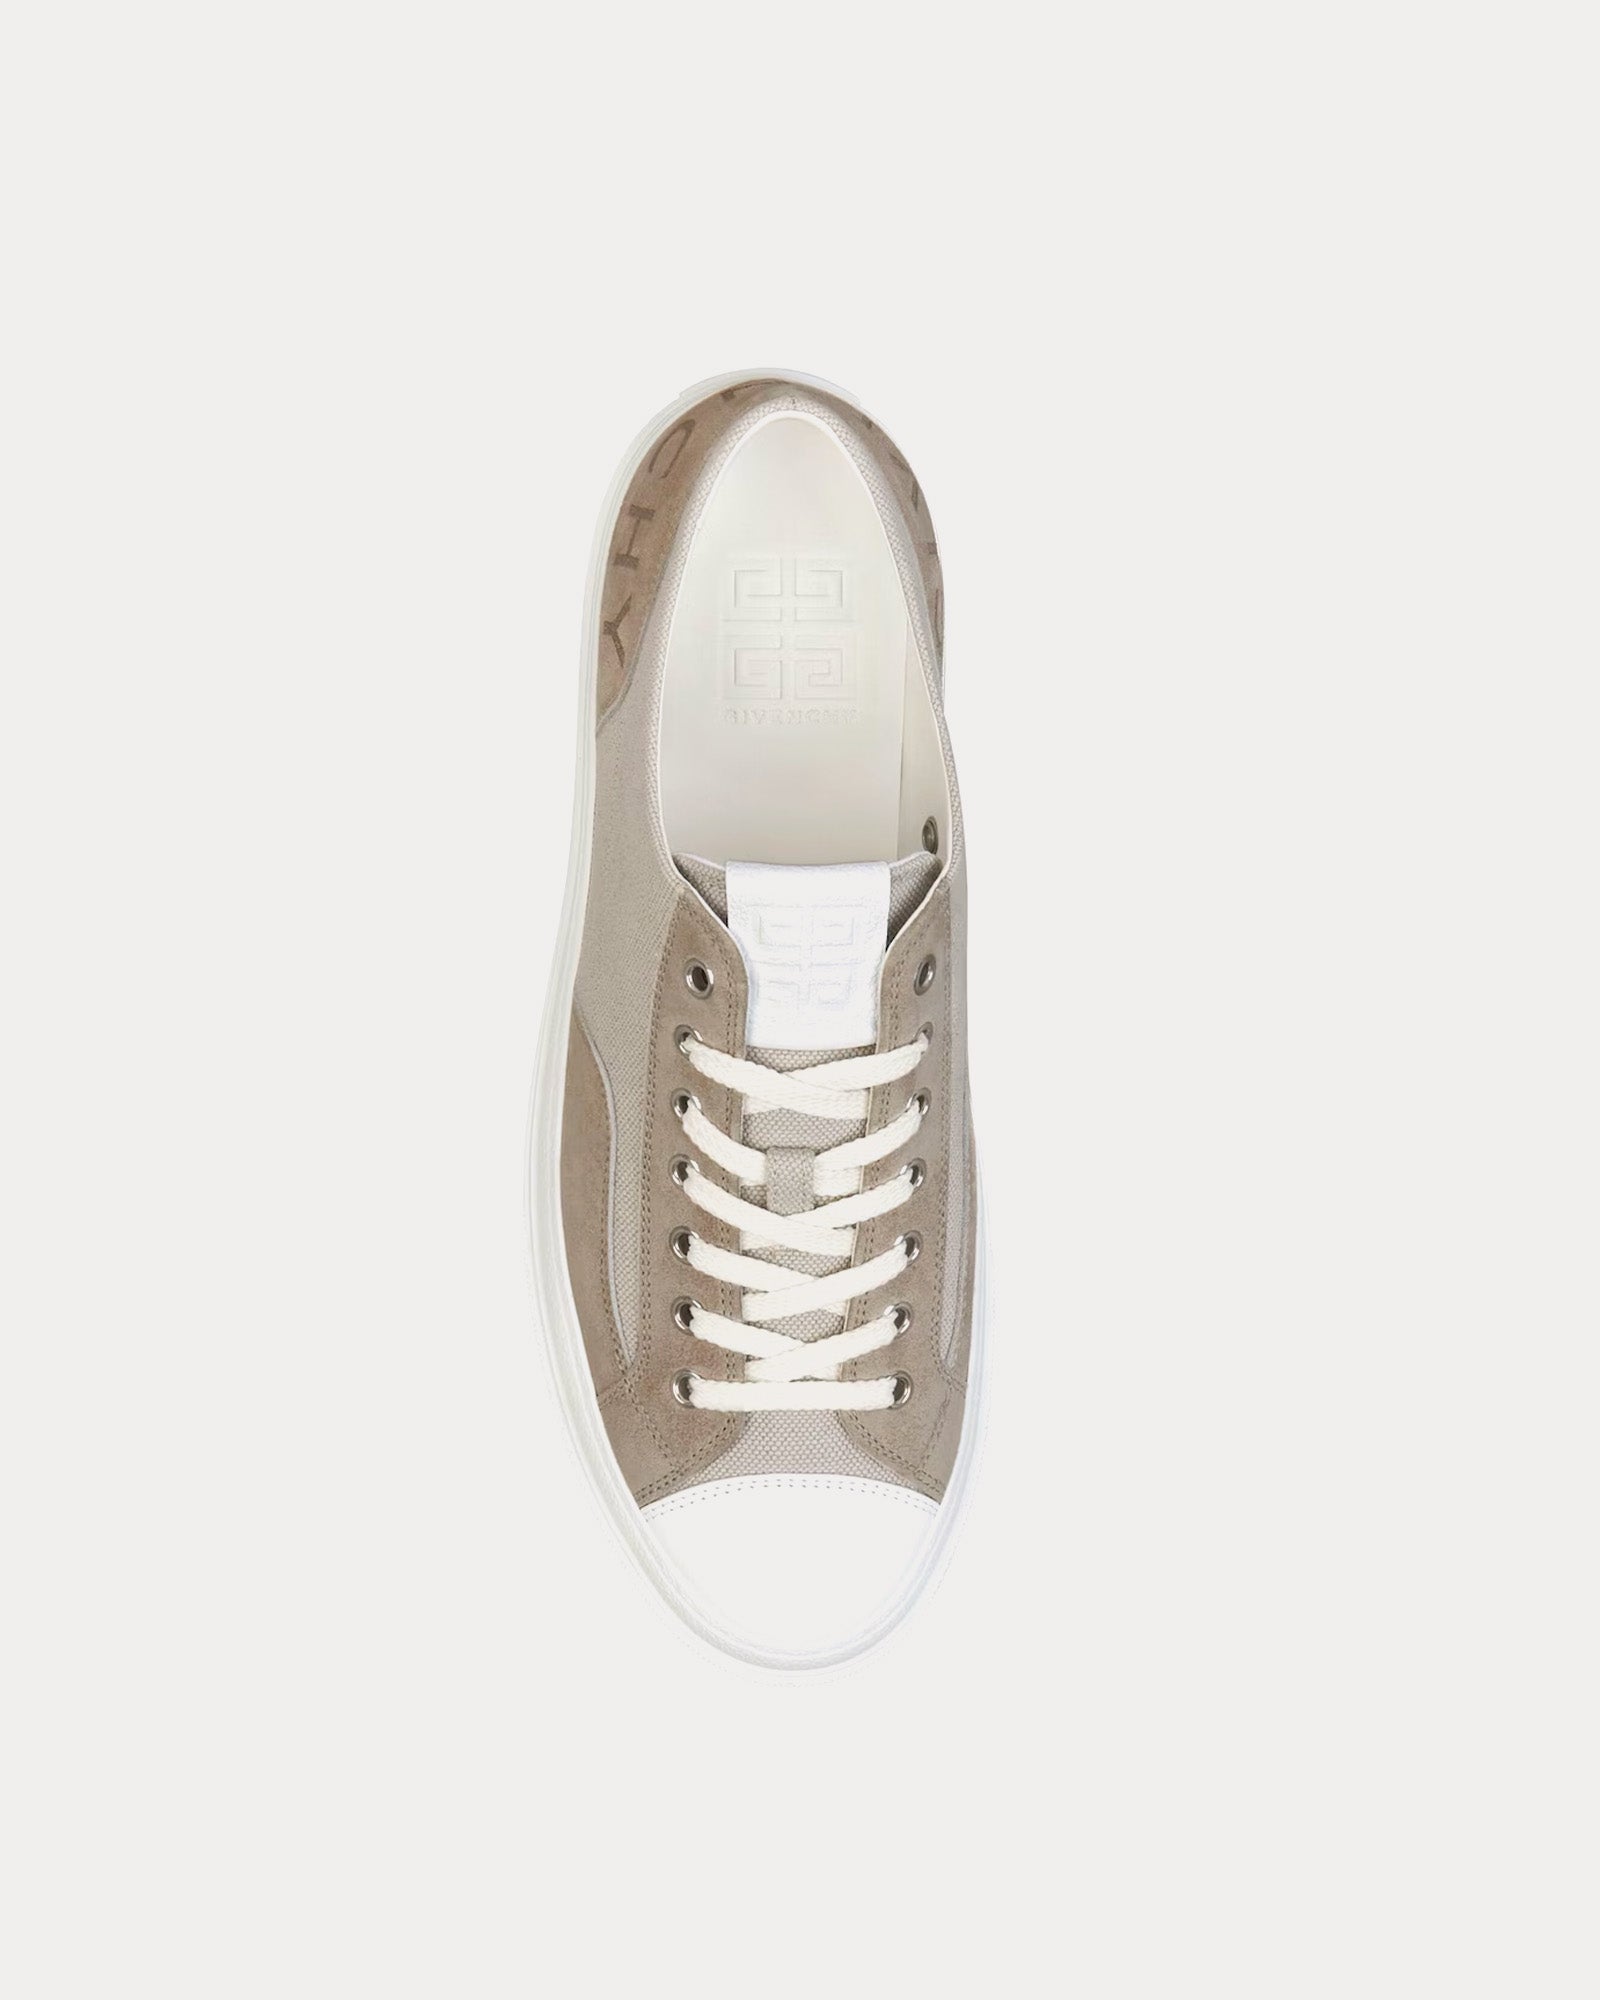 Givenchy - City Canvas & Suede Medium Grey Low Top Sneakers